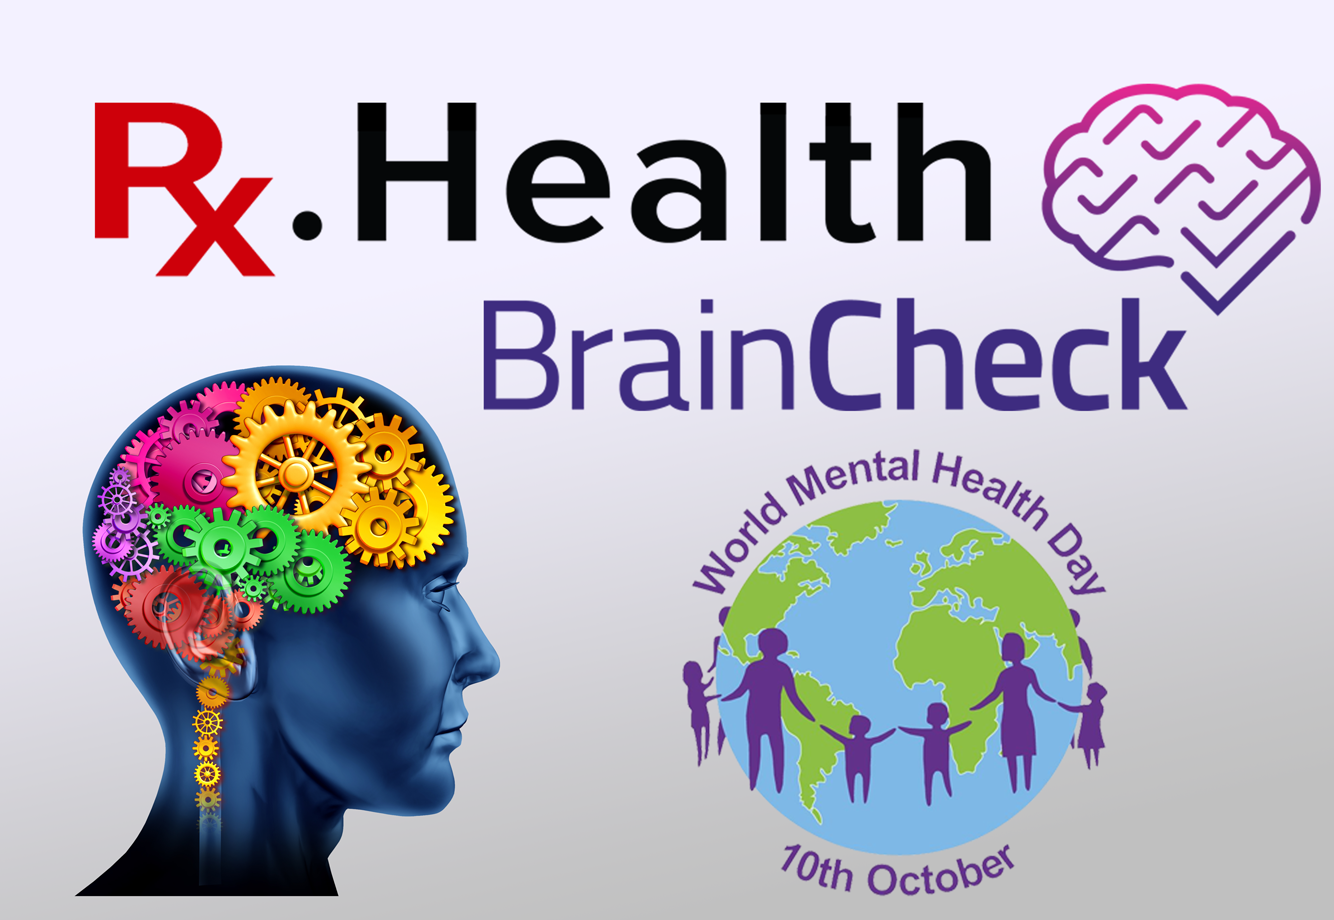 Rx.Health, BrainCheck Partnership